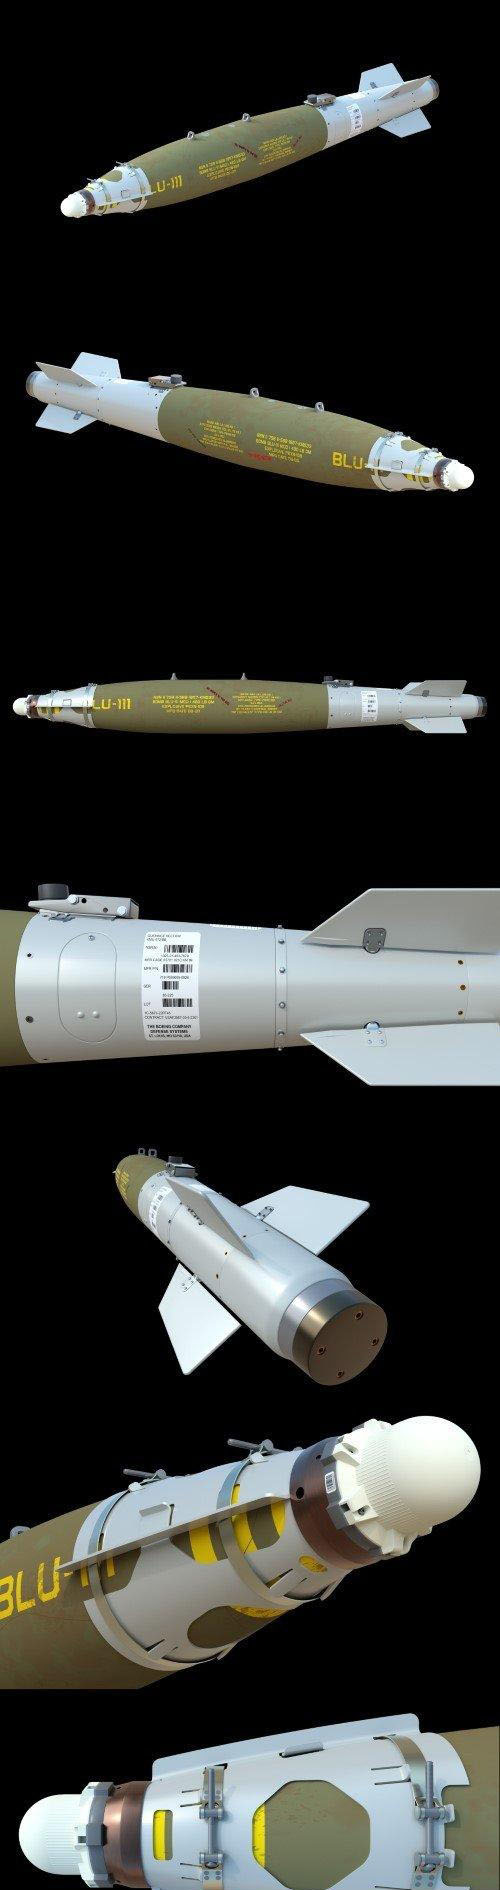 GBU 38 JDAM Bomb - 3d model